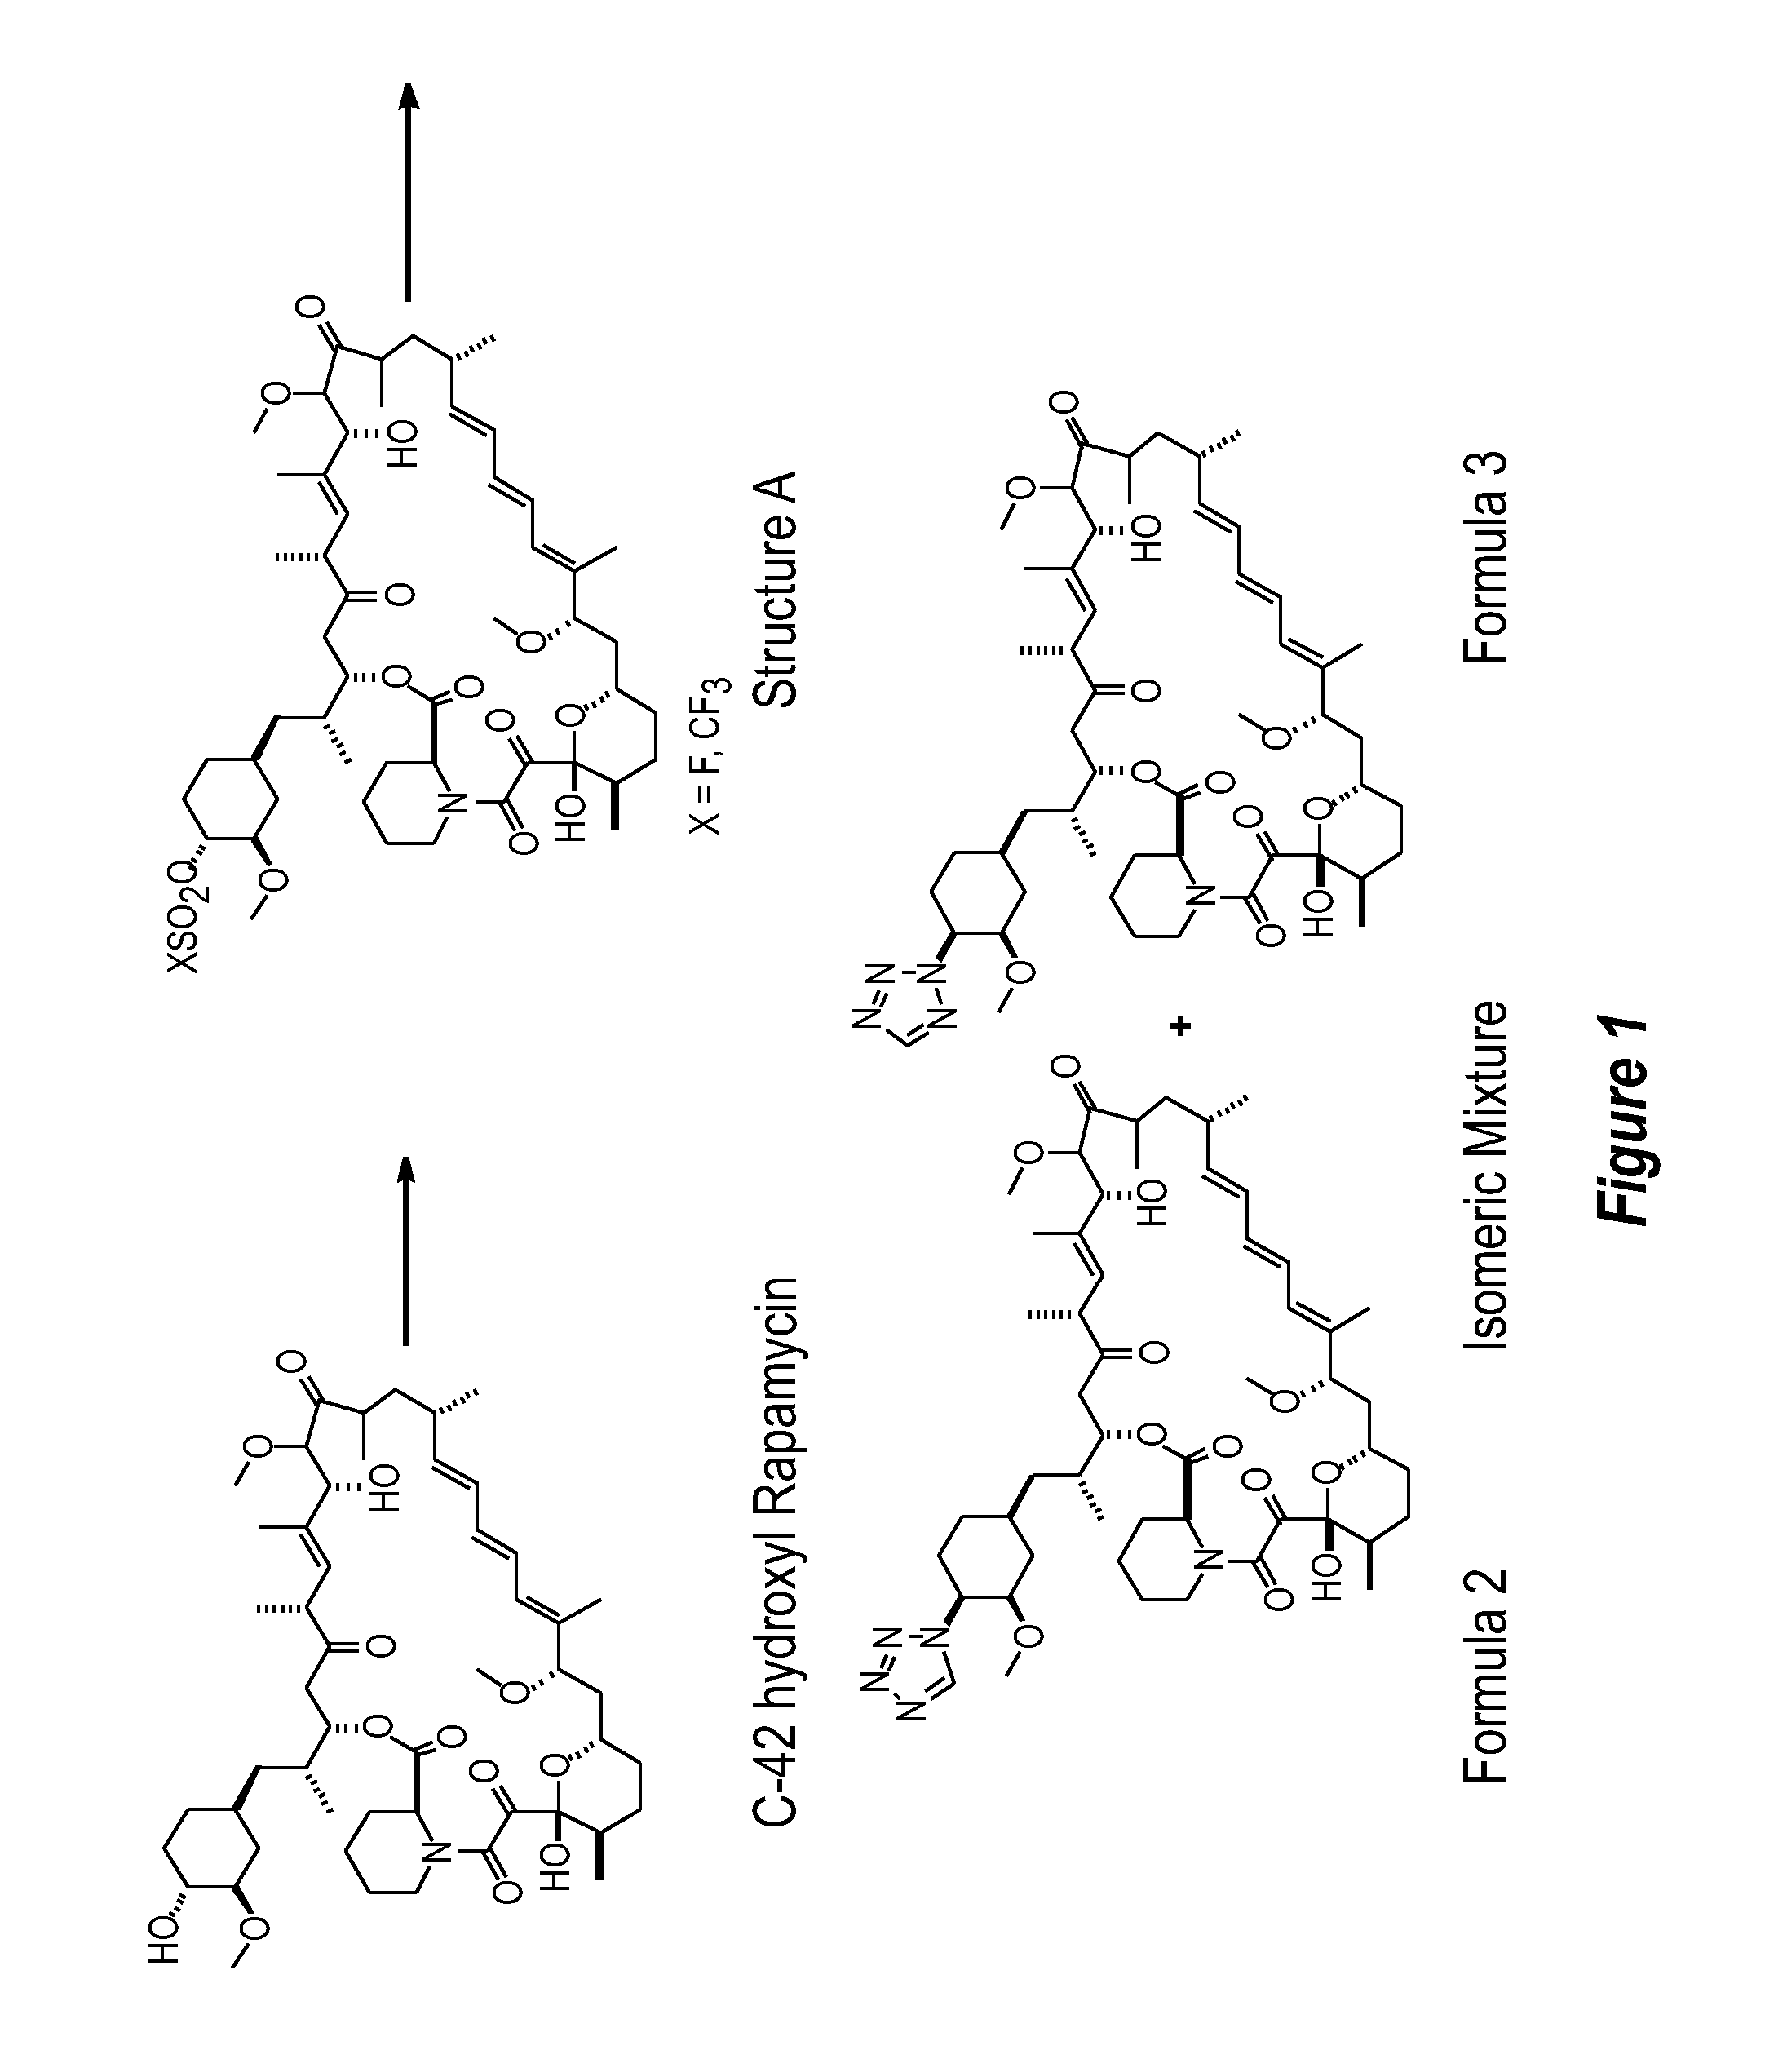 Crystalline forms of rapamycin analogs